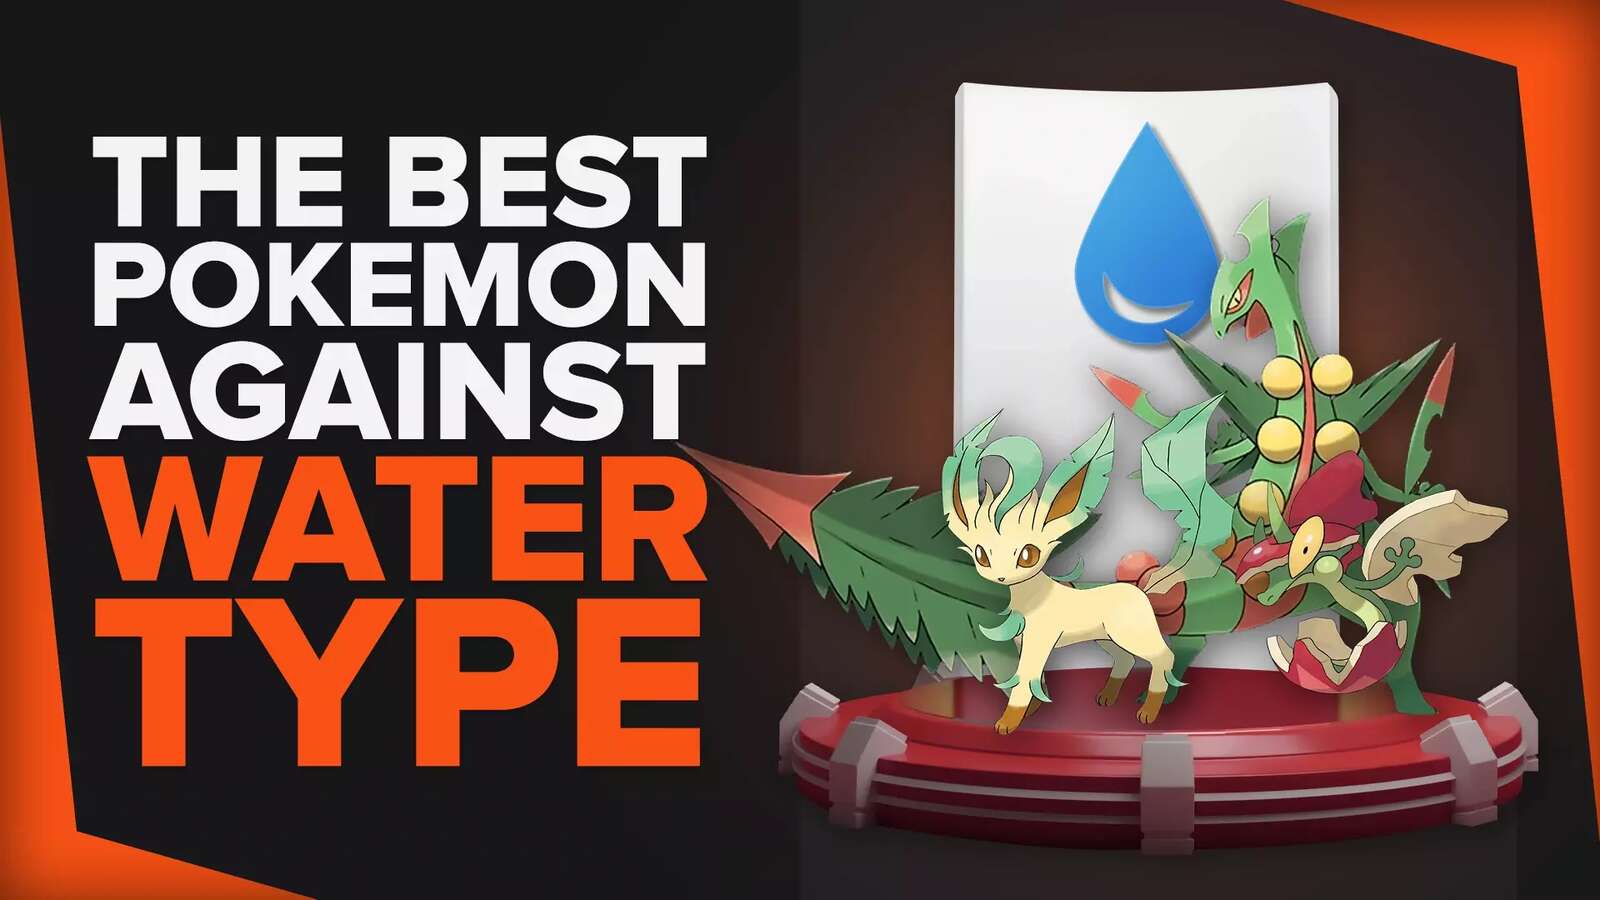 The 10 Best Pokemon Against Water Type Pokemon [Ranked]